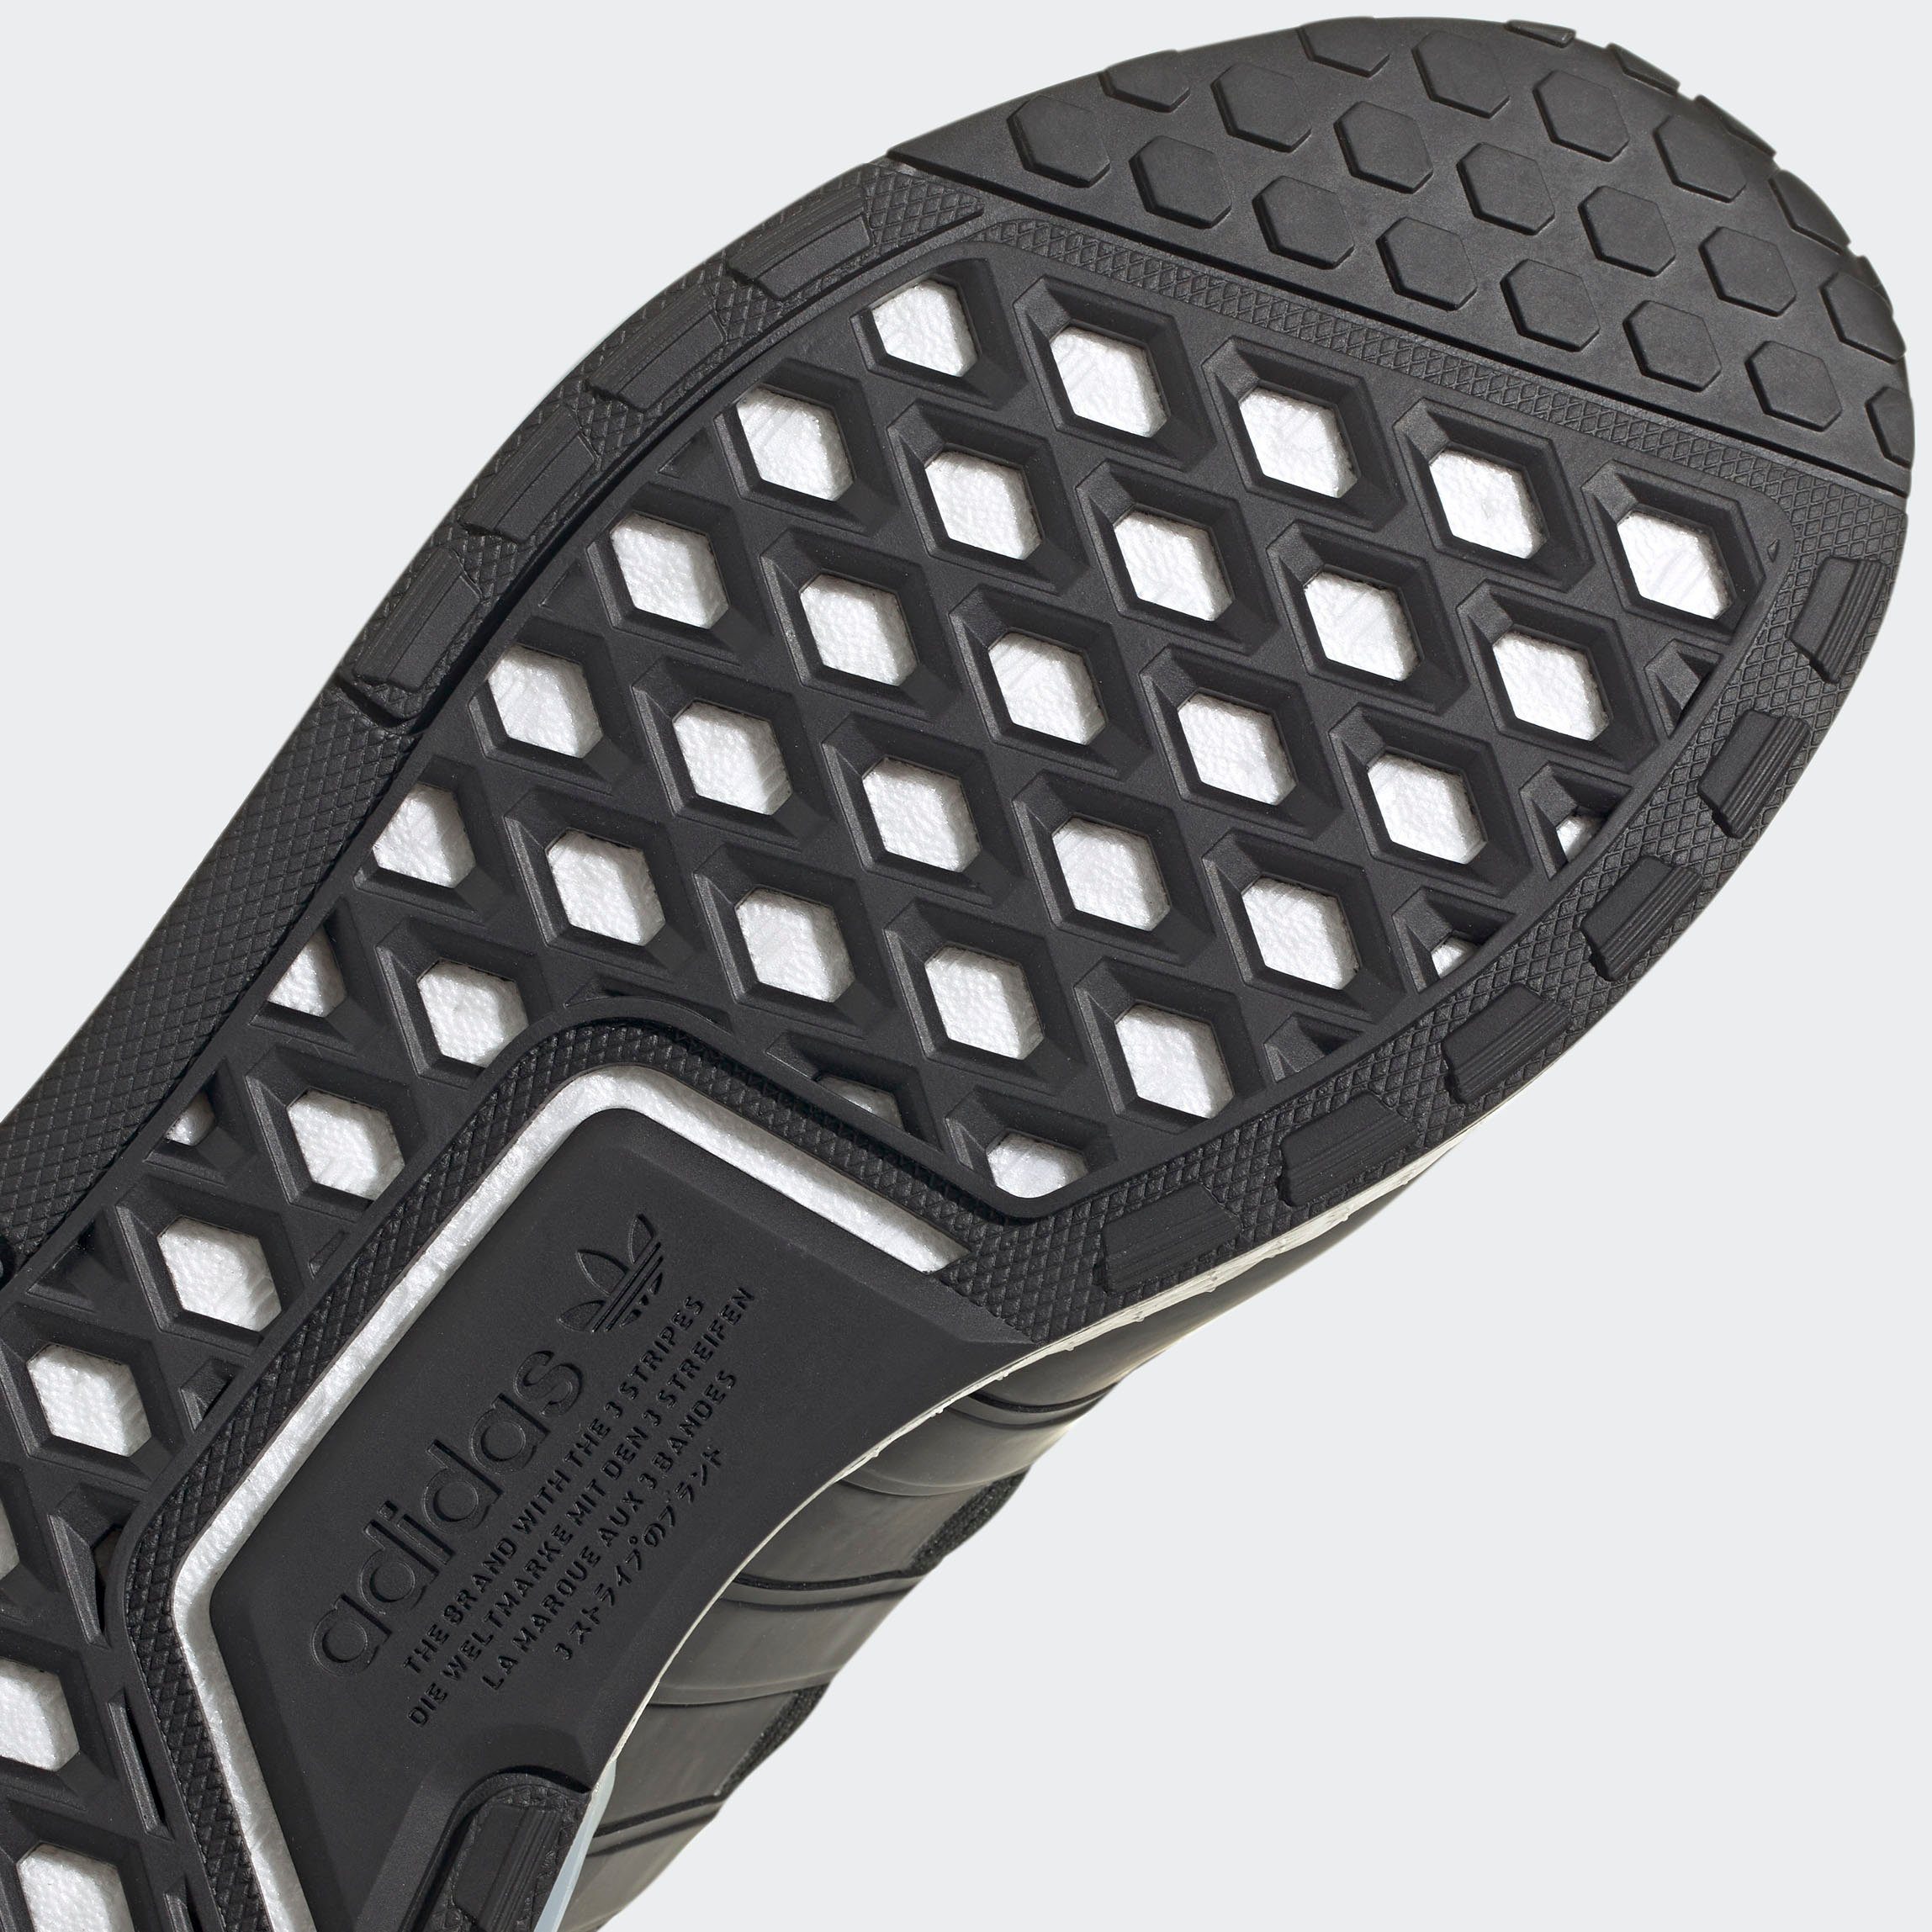 NMD_V3 adidas Originals schwarz-blau Sneaker